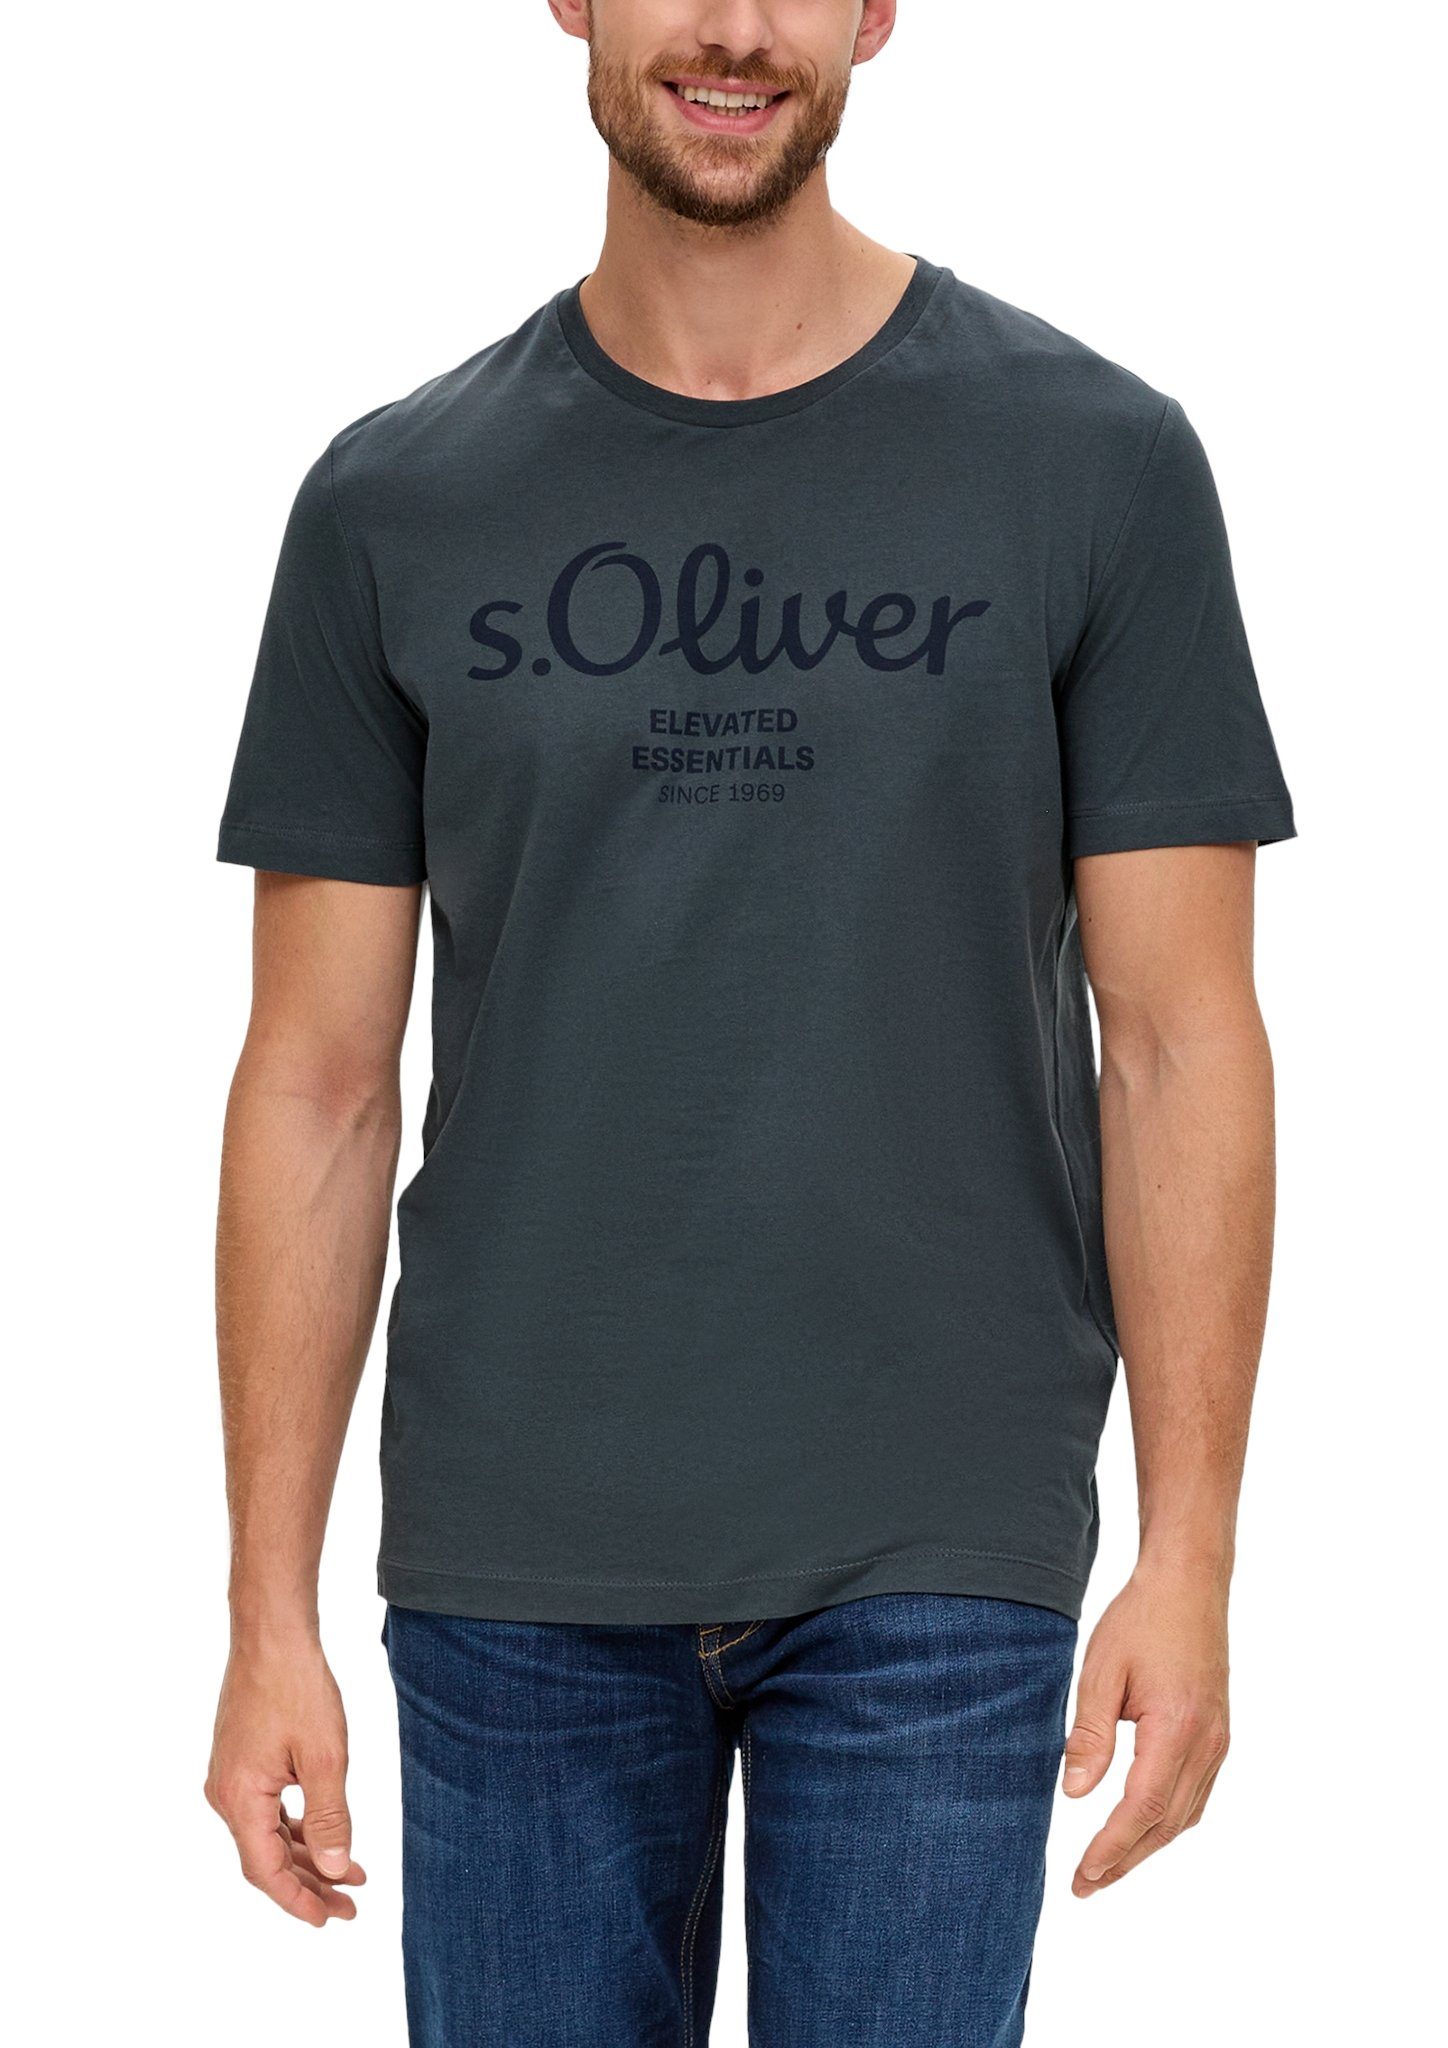 sportiven dark Look im grey s.Oliver T-Shirt